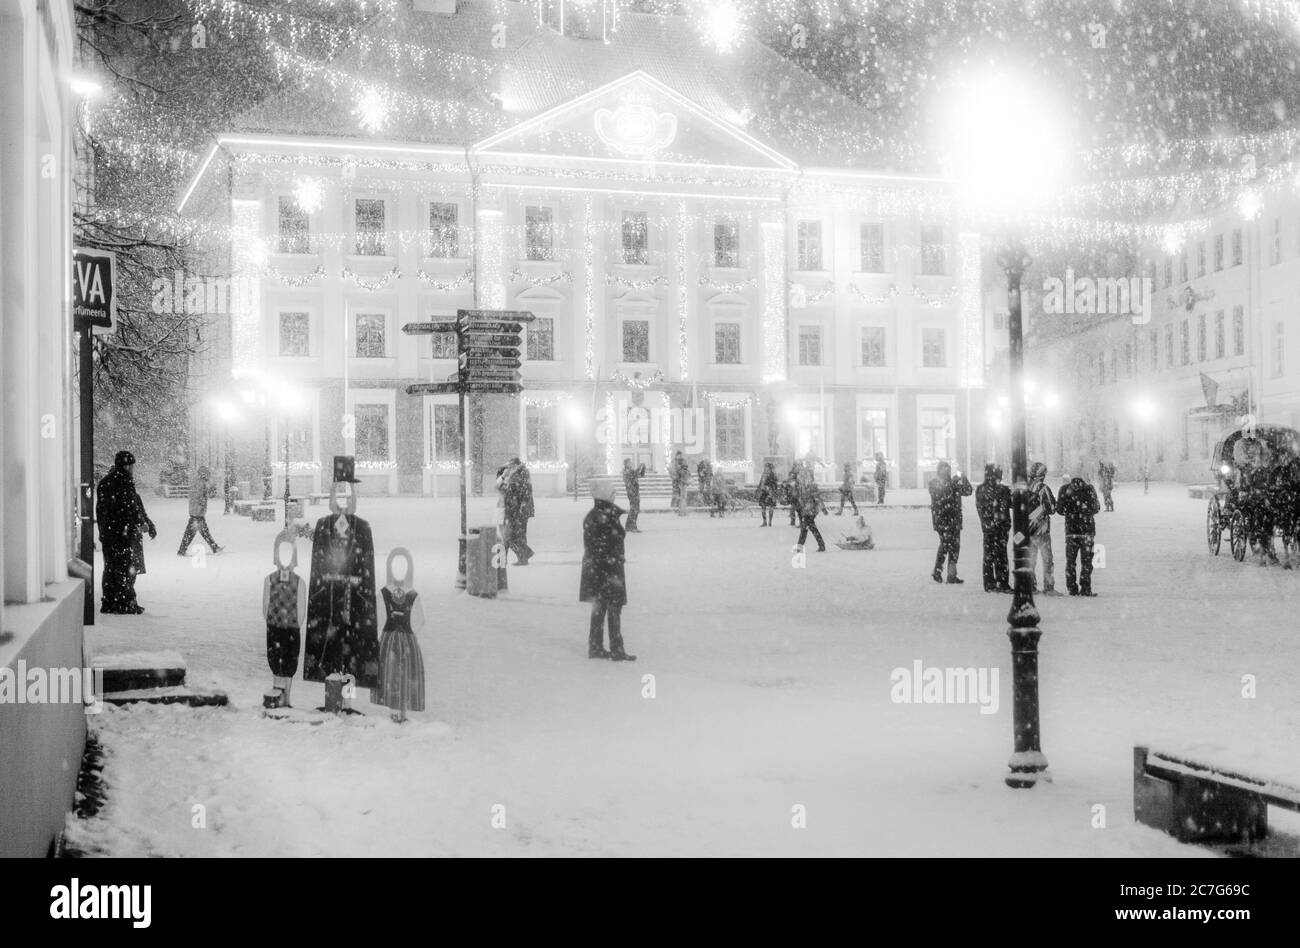 TARTU, ESTONIA - Dec 24, 2014: Tartu Town Hall Square on a Christmas Eve during heavy snowfall Stock Photo